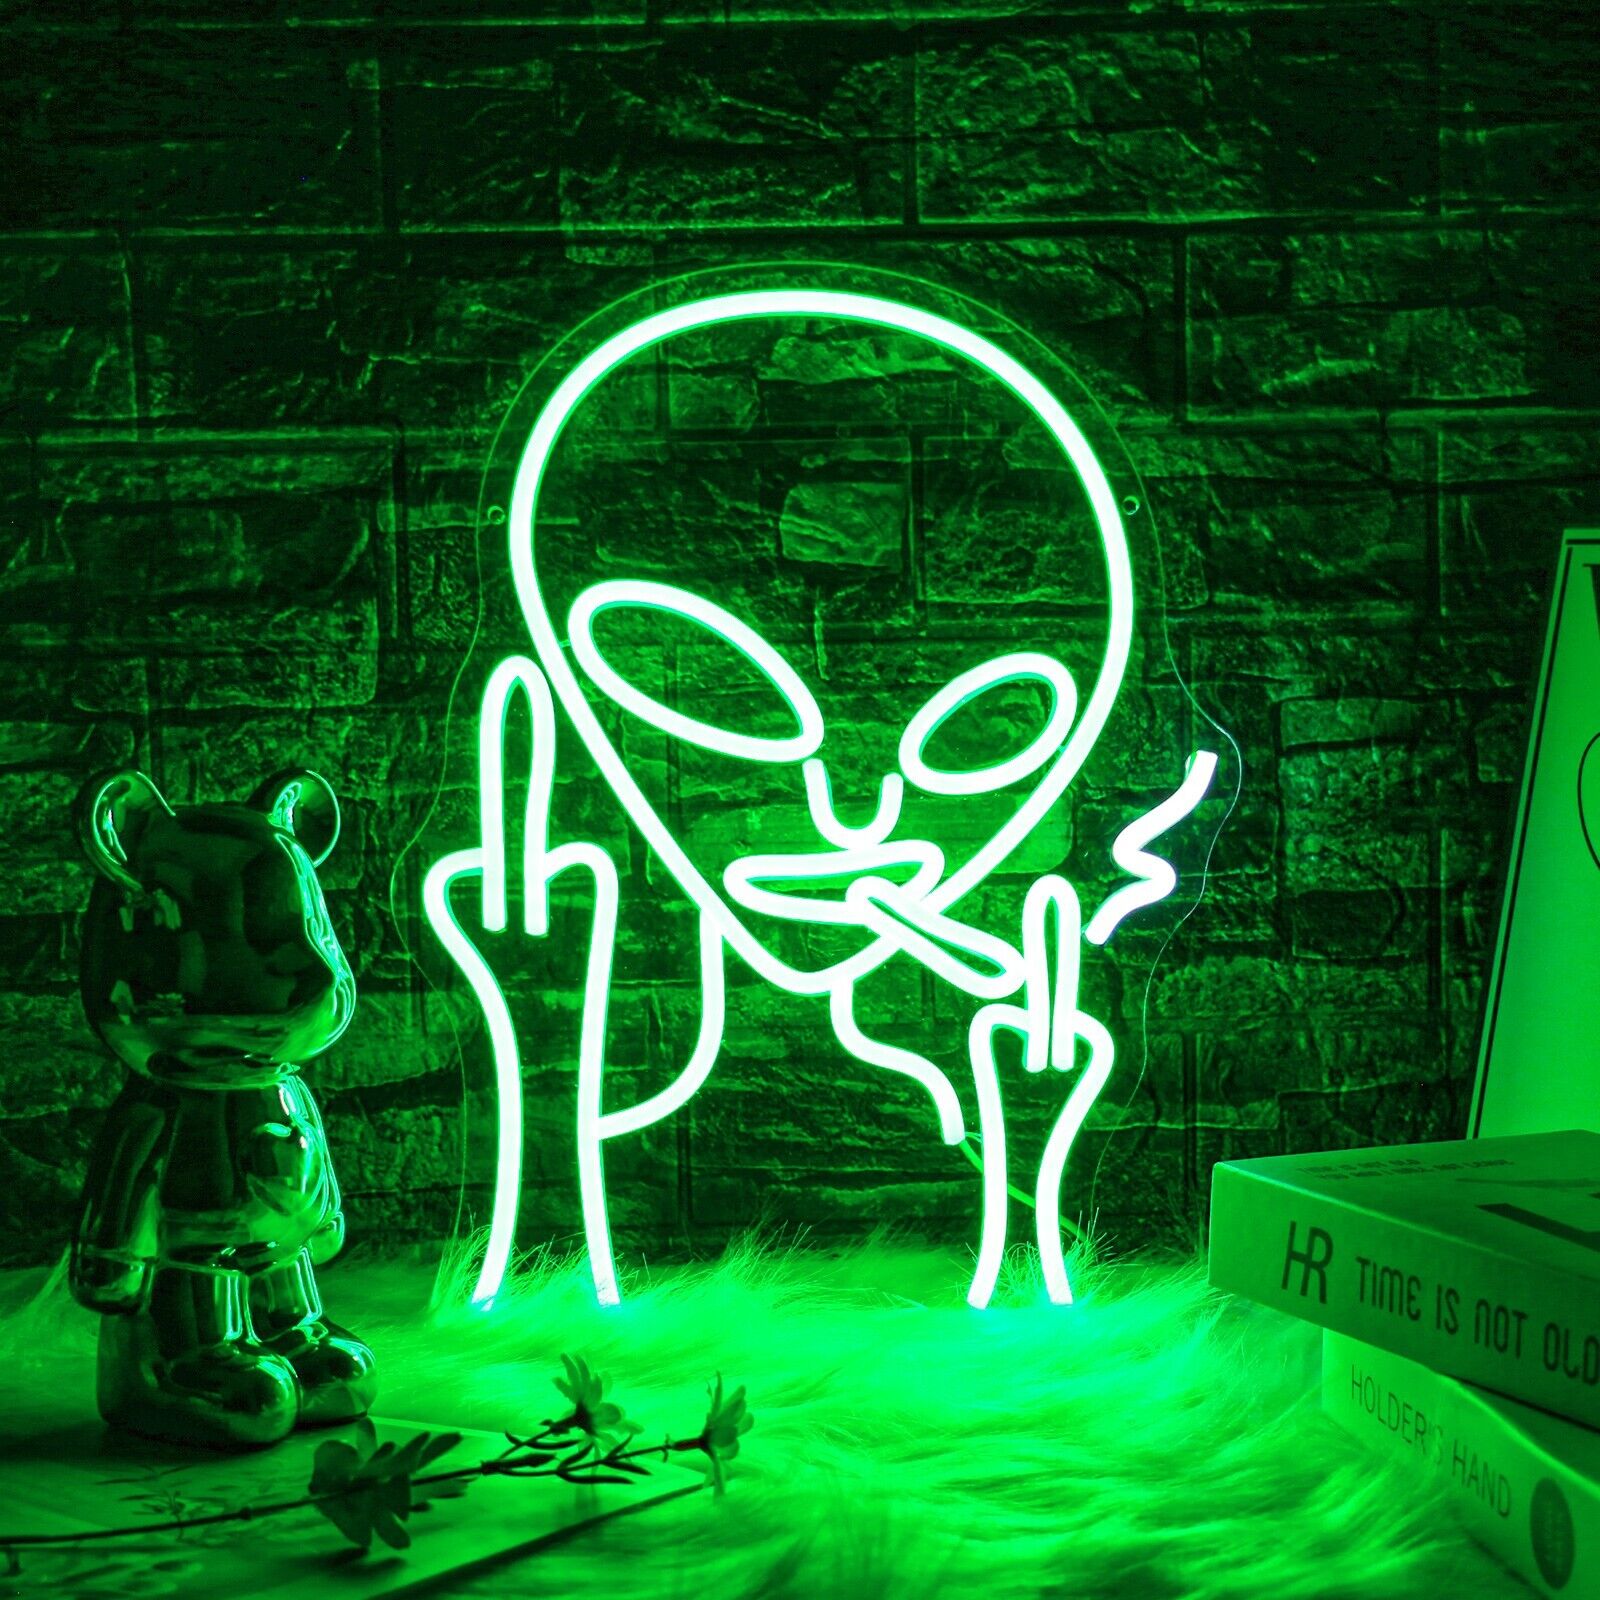 LED Alien Neon Sign: Green Aesthetic Room Decor for Bedroom, Bar, Party (USB)